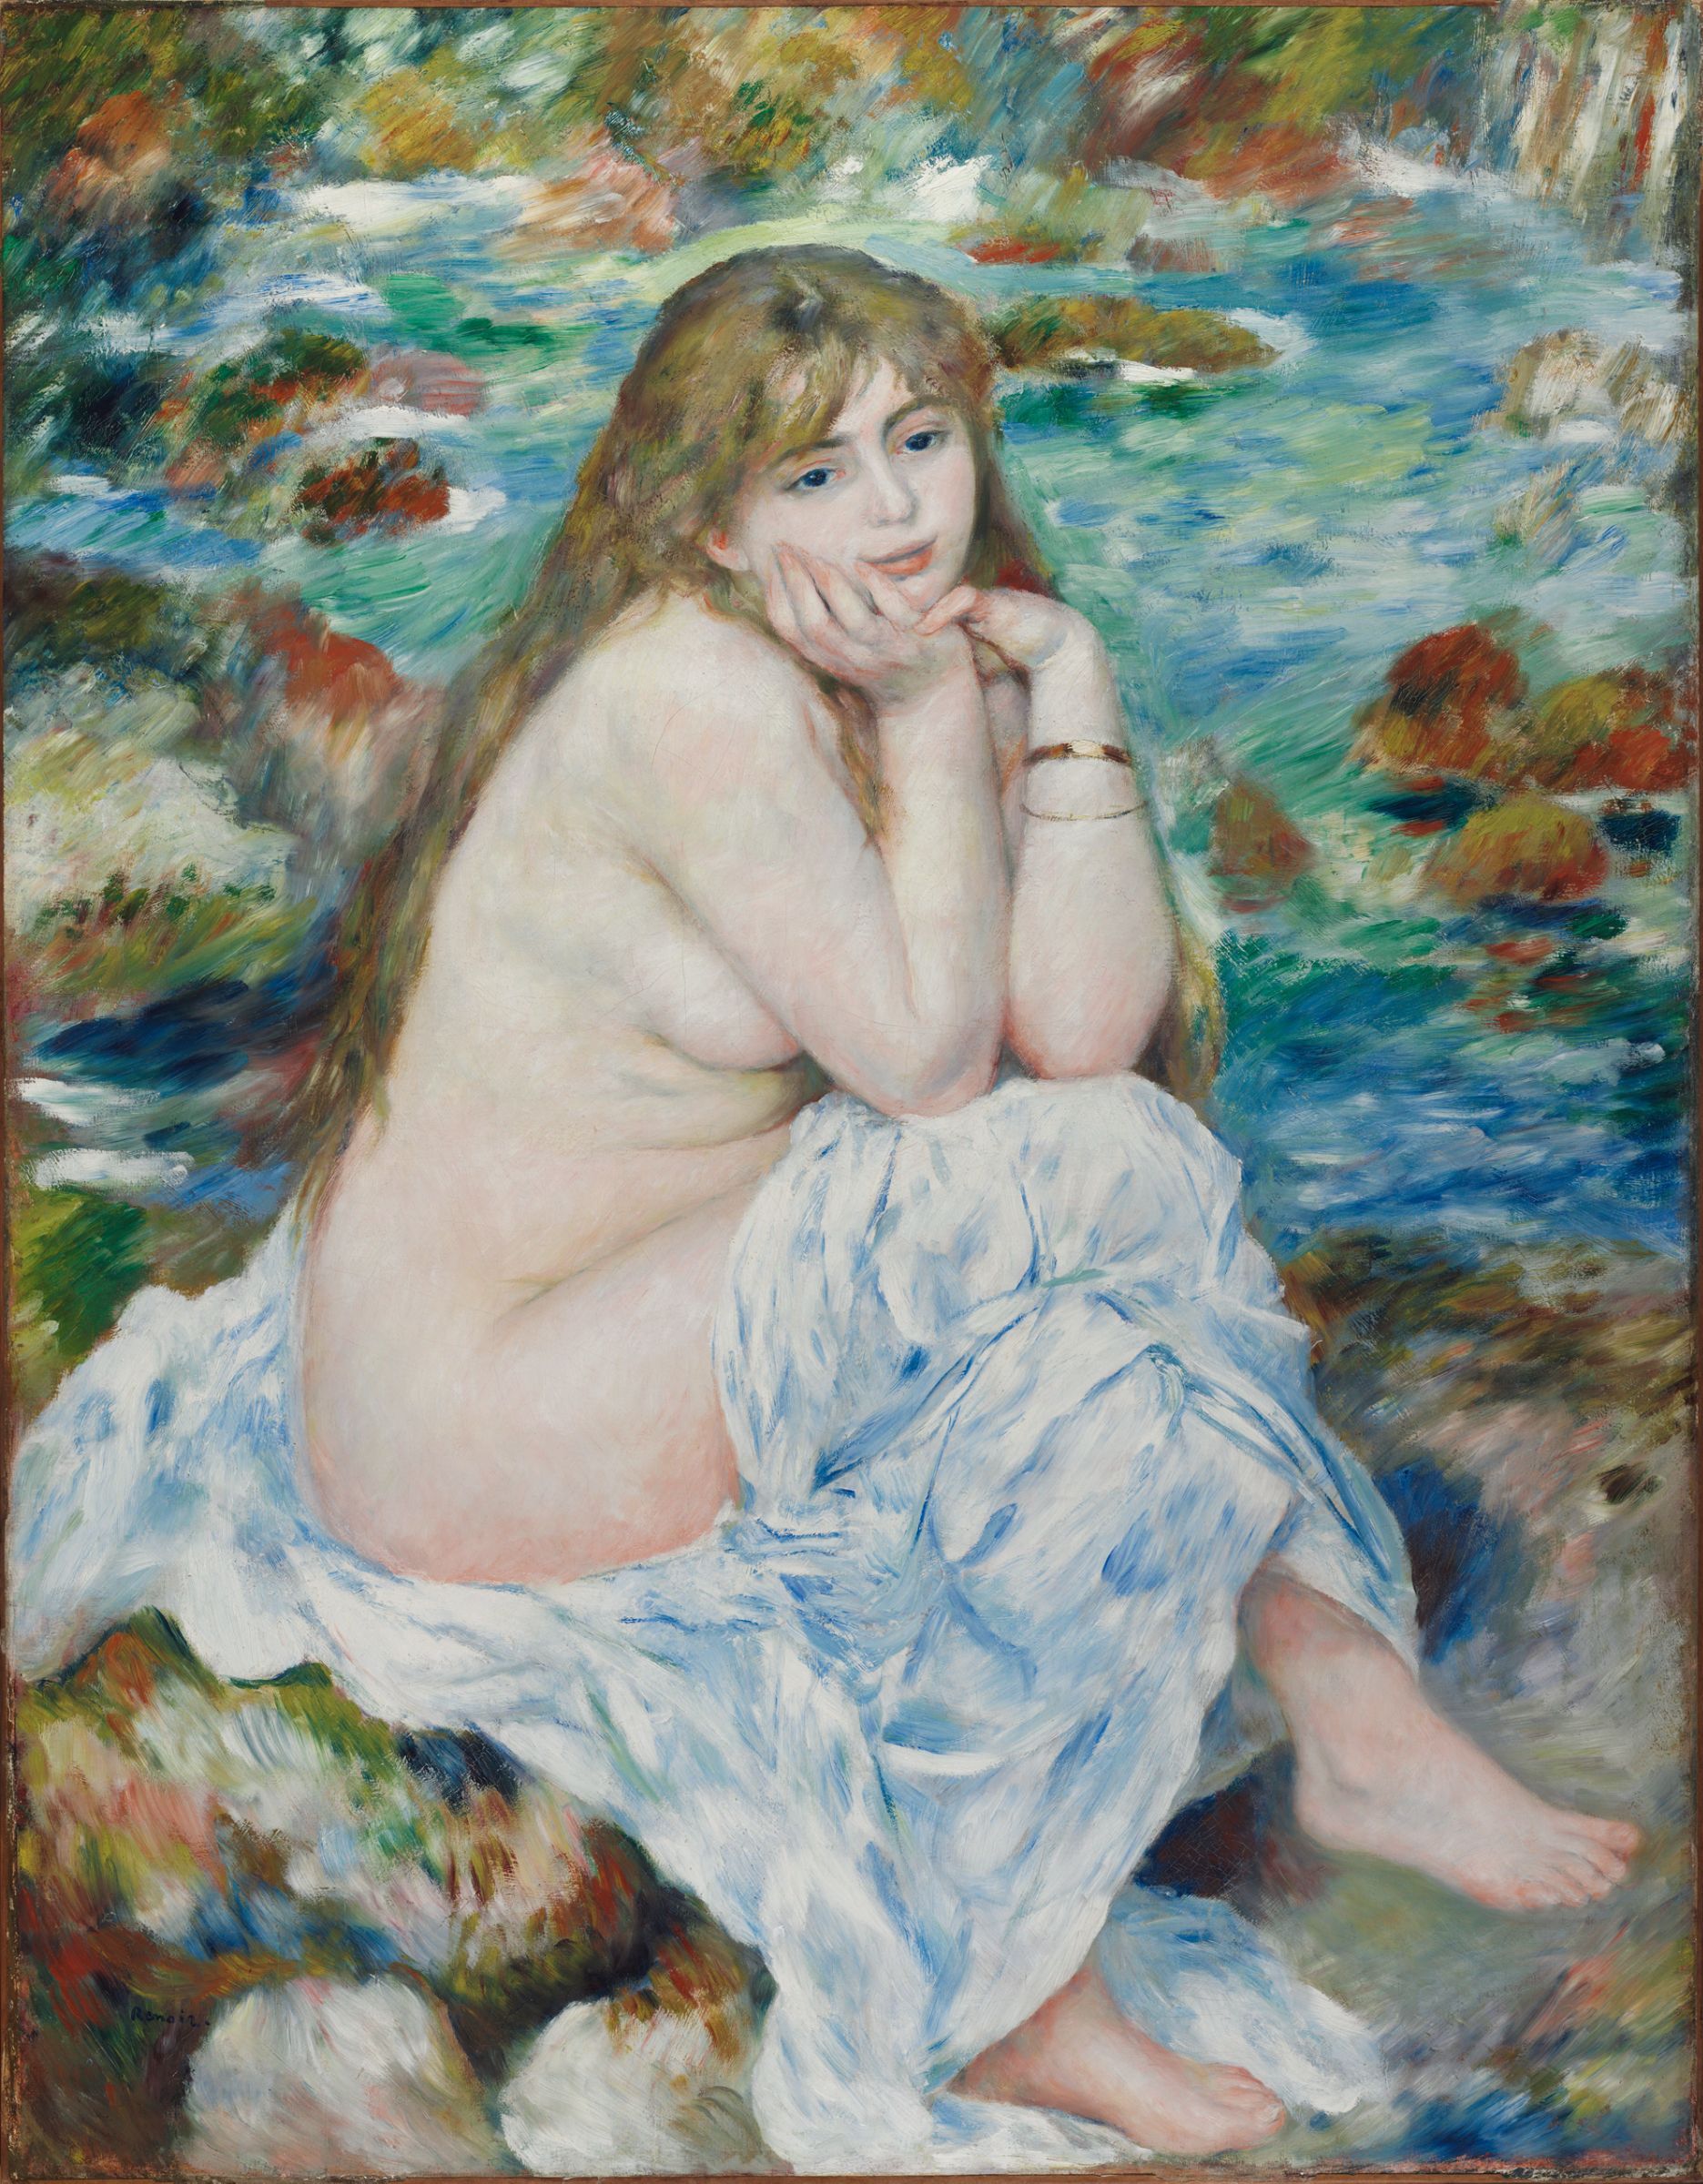 Seated Bather by Pierre-Auguste Renoir - c. 1883-1884 - 93.0 x 119.7 cm Harvard Art Museums